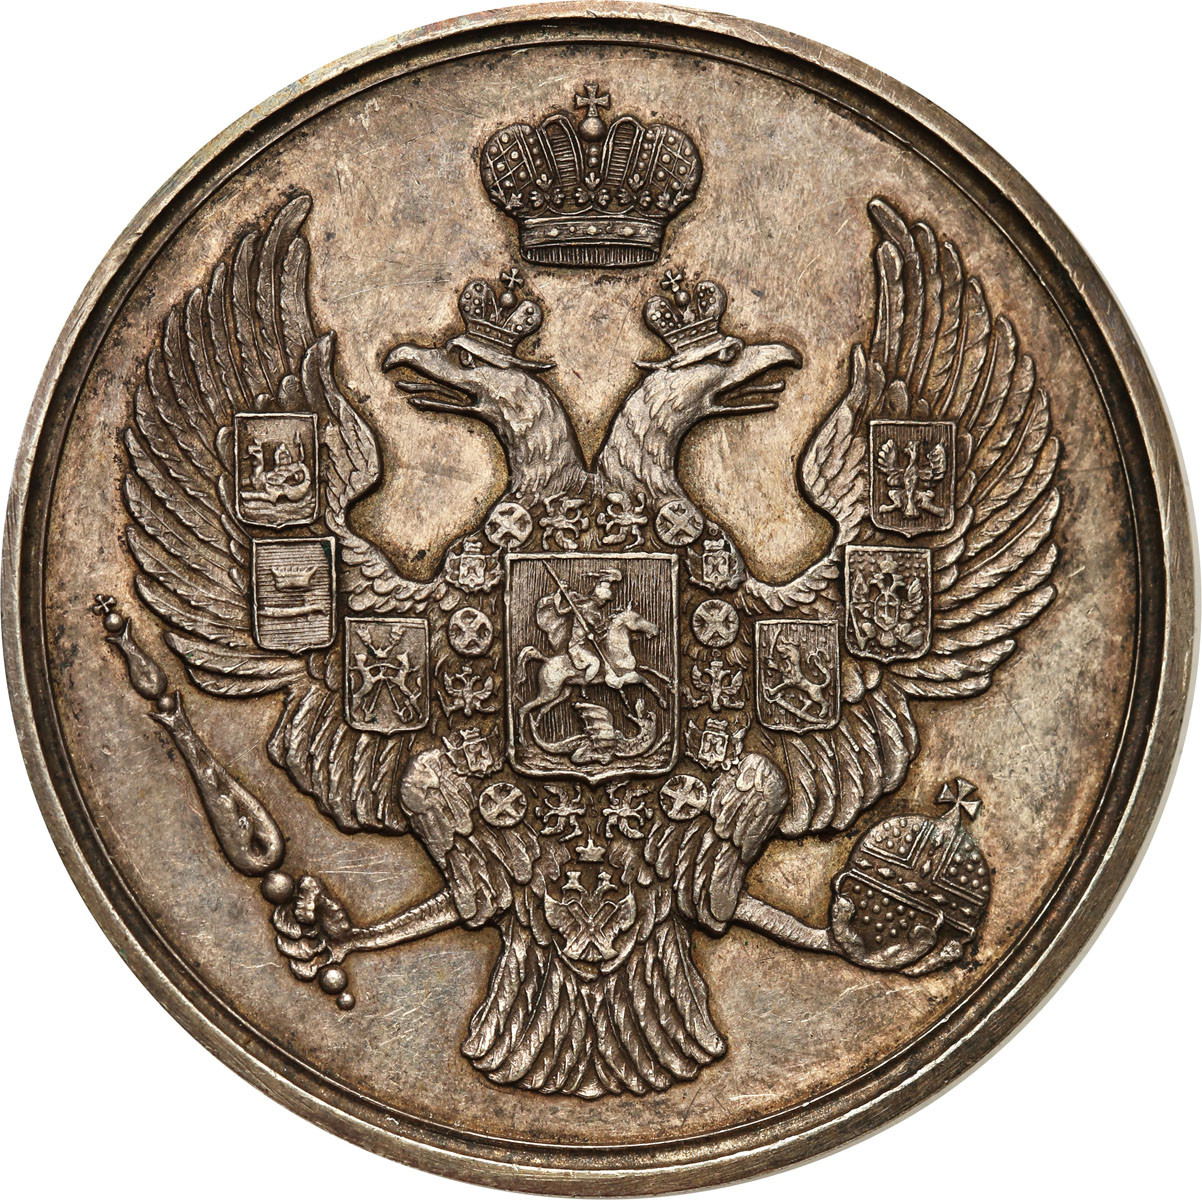 Rosja, Mikołaj I. Medal nagrodowy za naukę, gimnazjalny (1835) - SREBRO